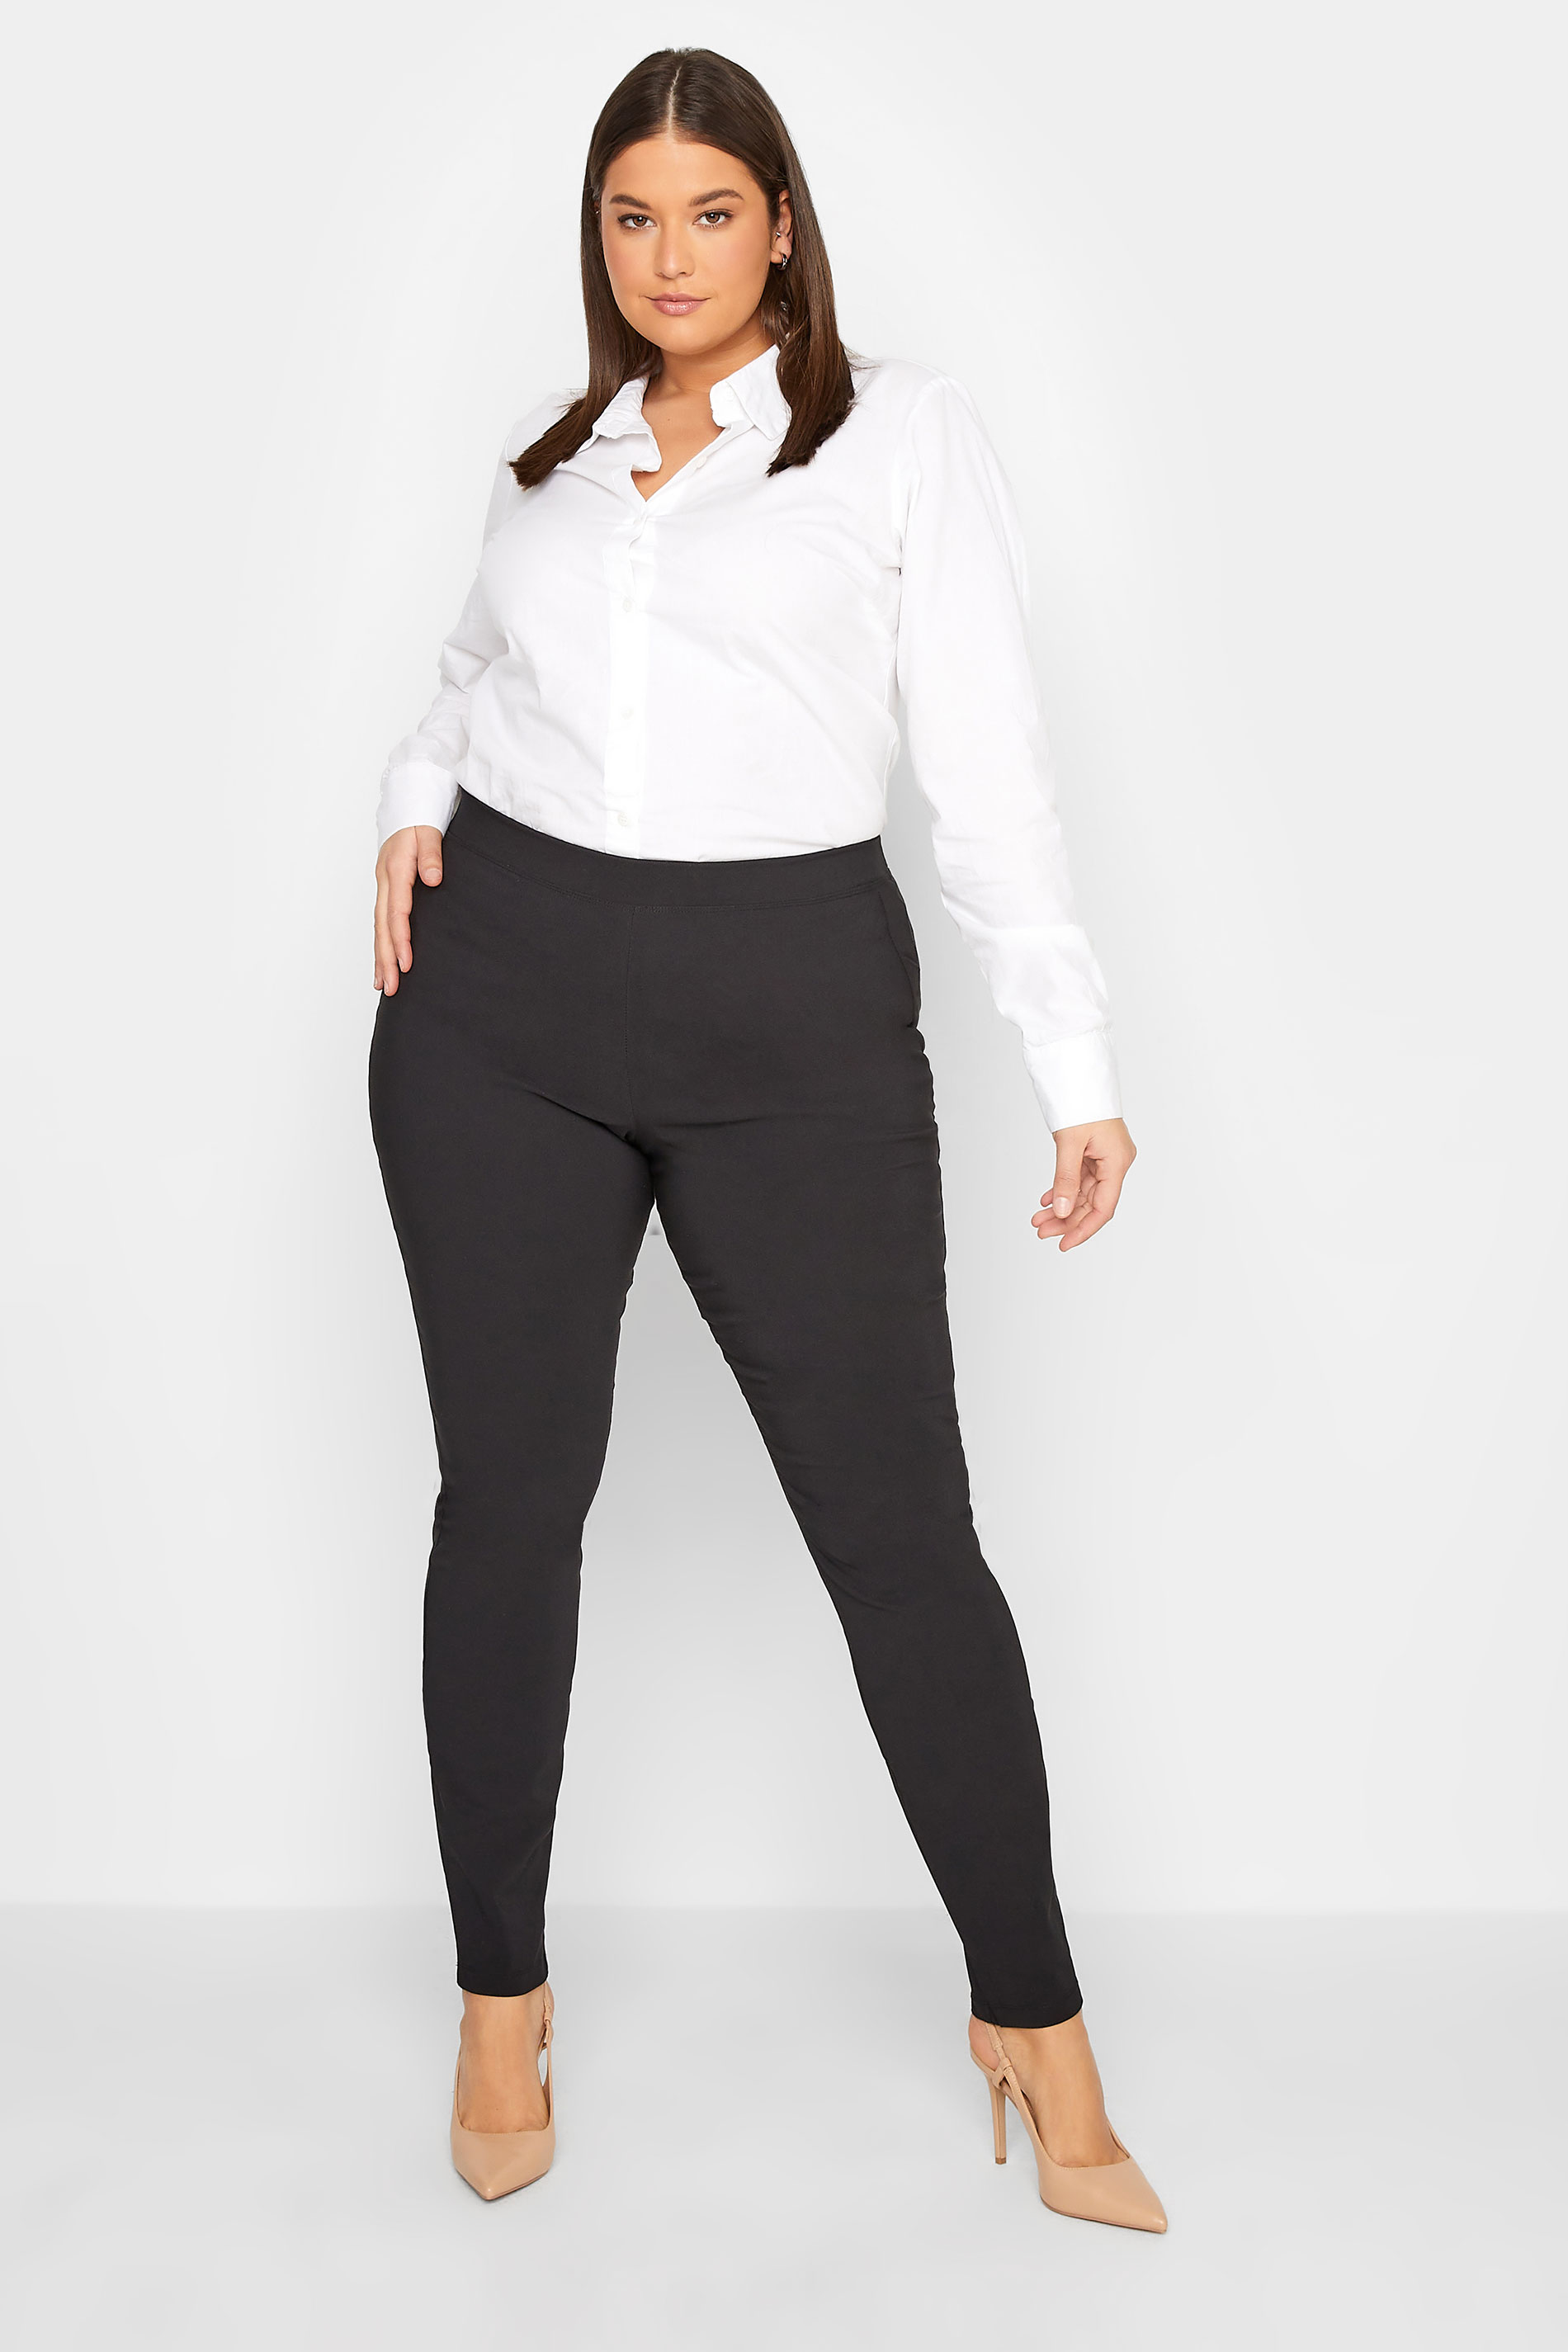 LTS Tall Women's Black Skinny Leg Trousers | Long Tall Sally 2